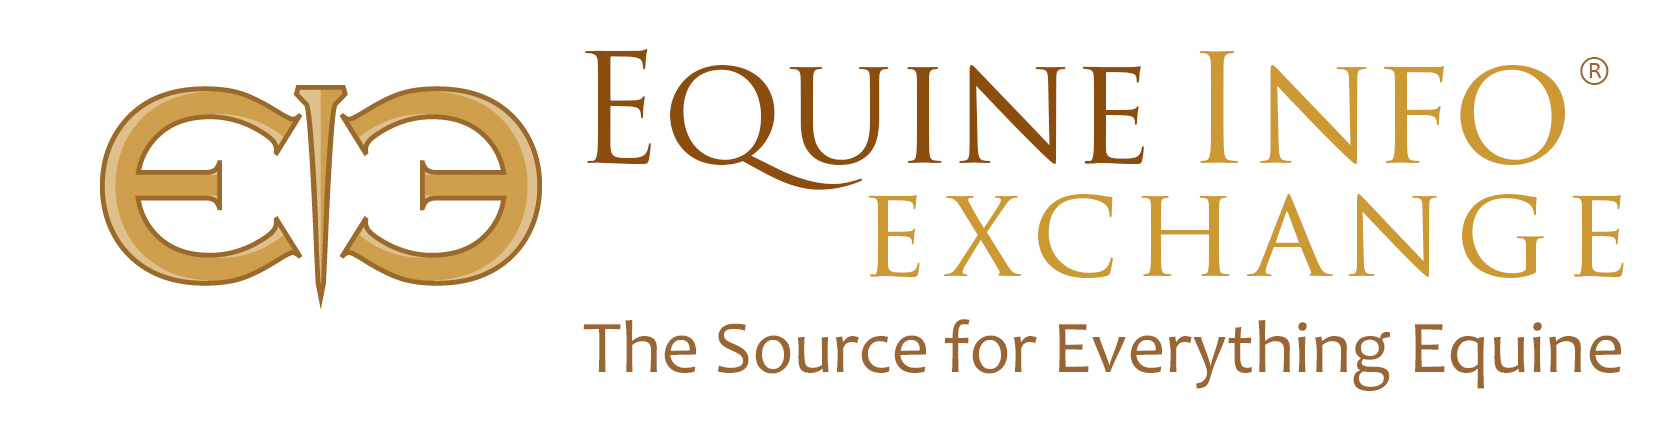 Equine Info Exchange - Print Logo - 300dpi, 5.55 in X 1.45 in